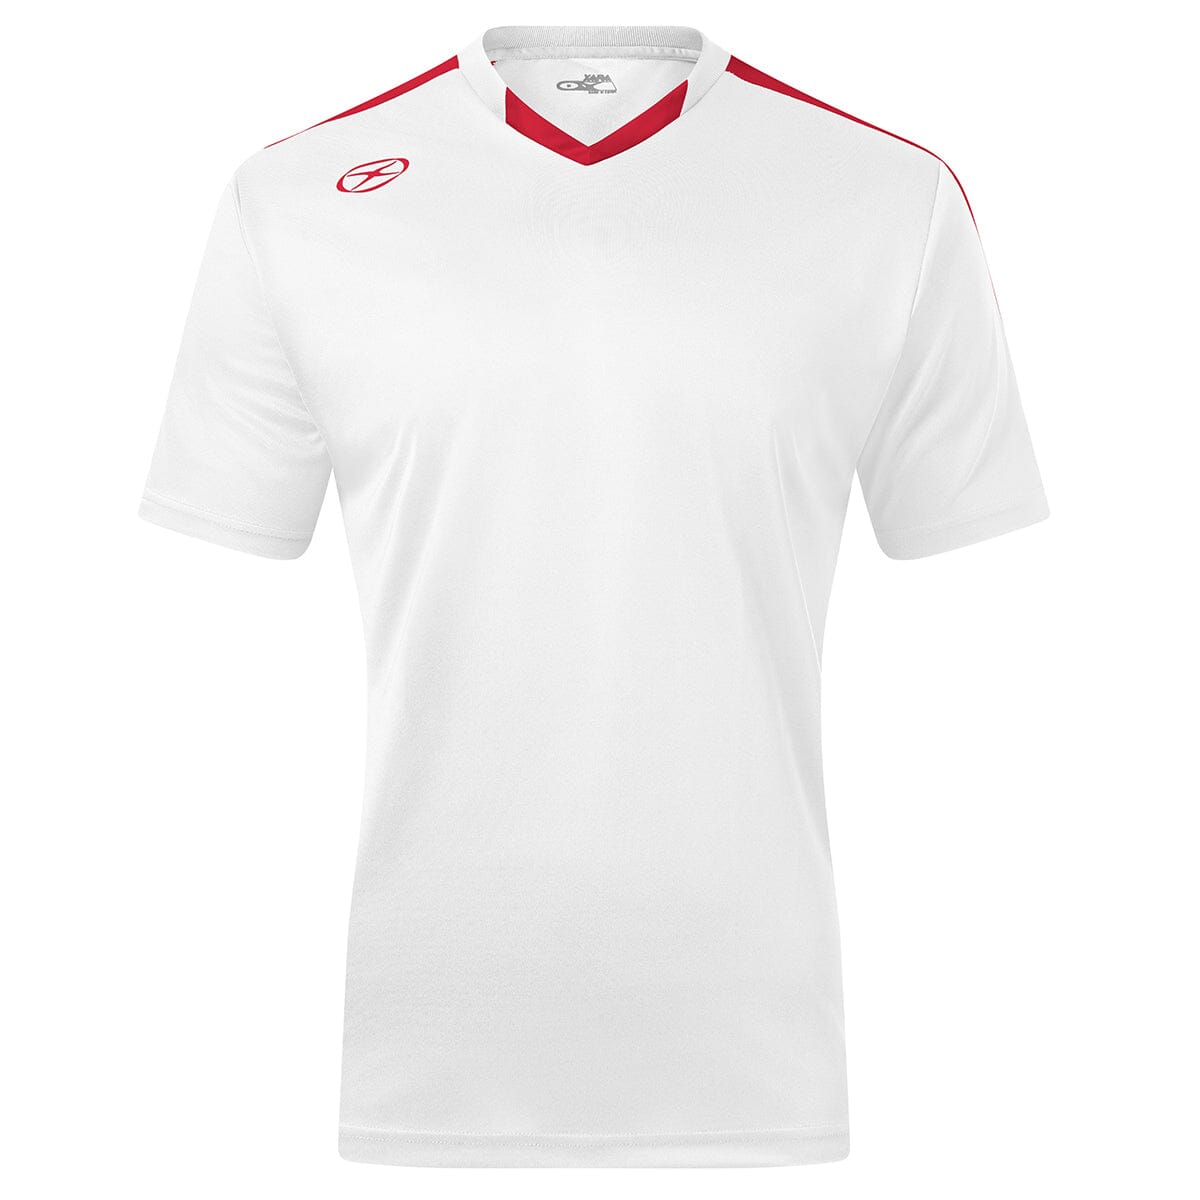 Britannia Jersey - Away Colors - Male Shirt Xara Soccer White/Red Medium 